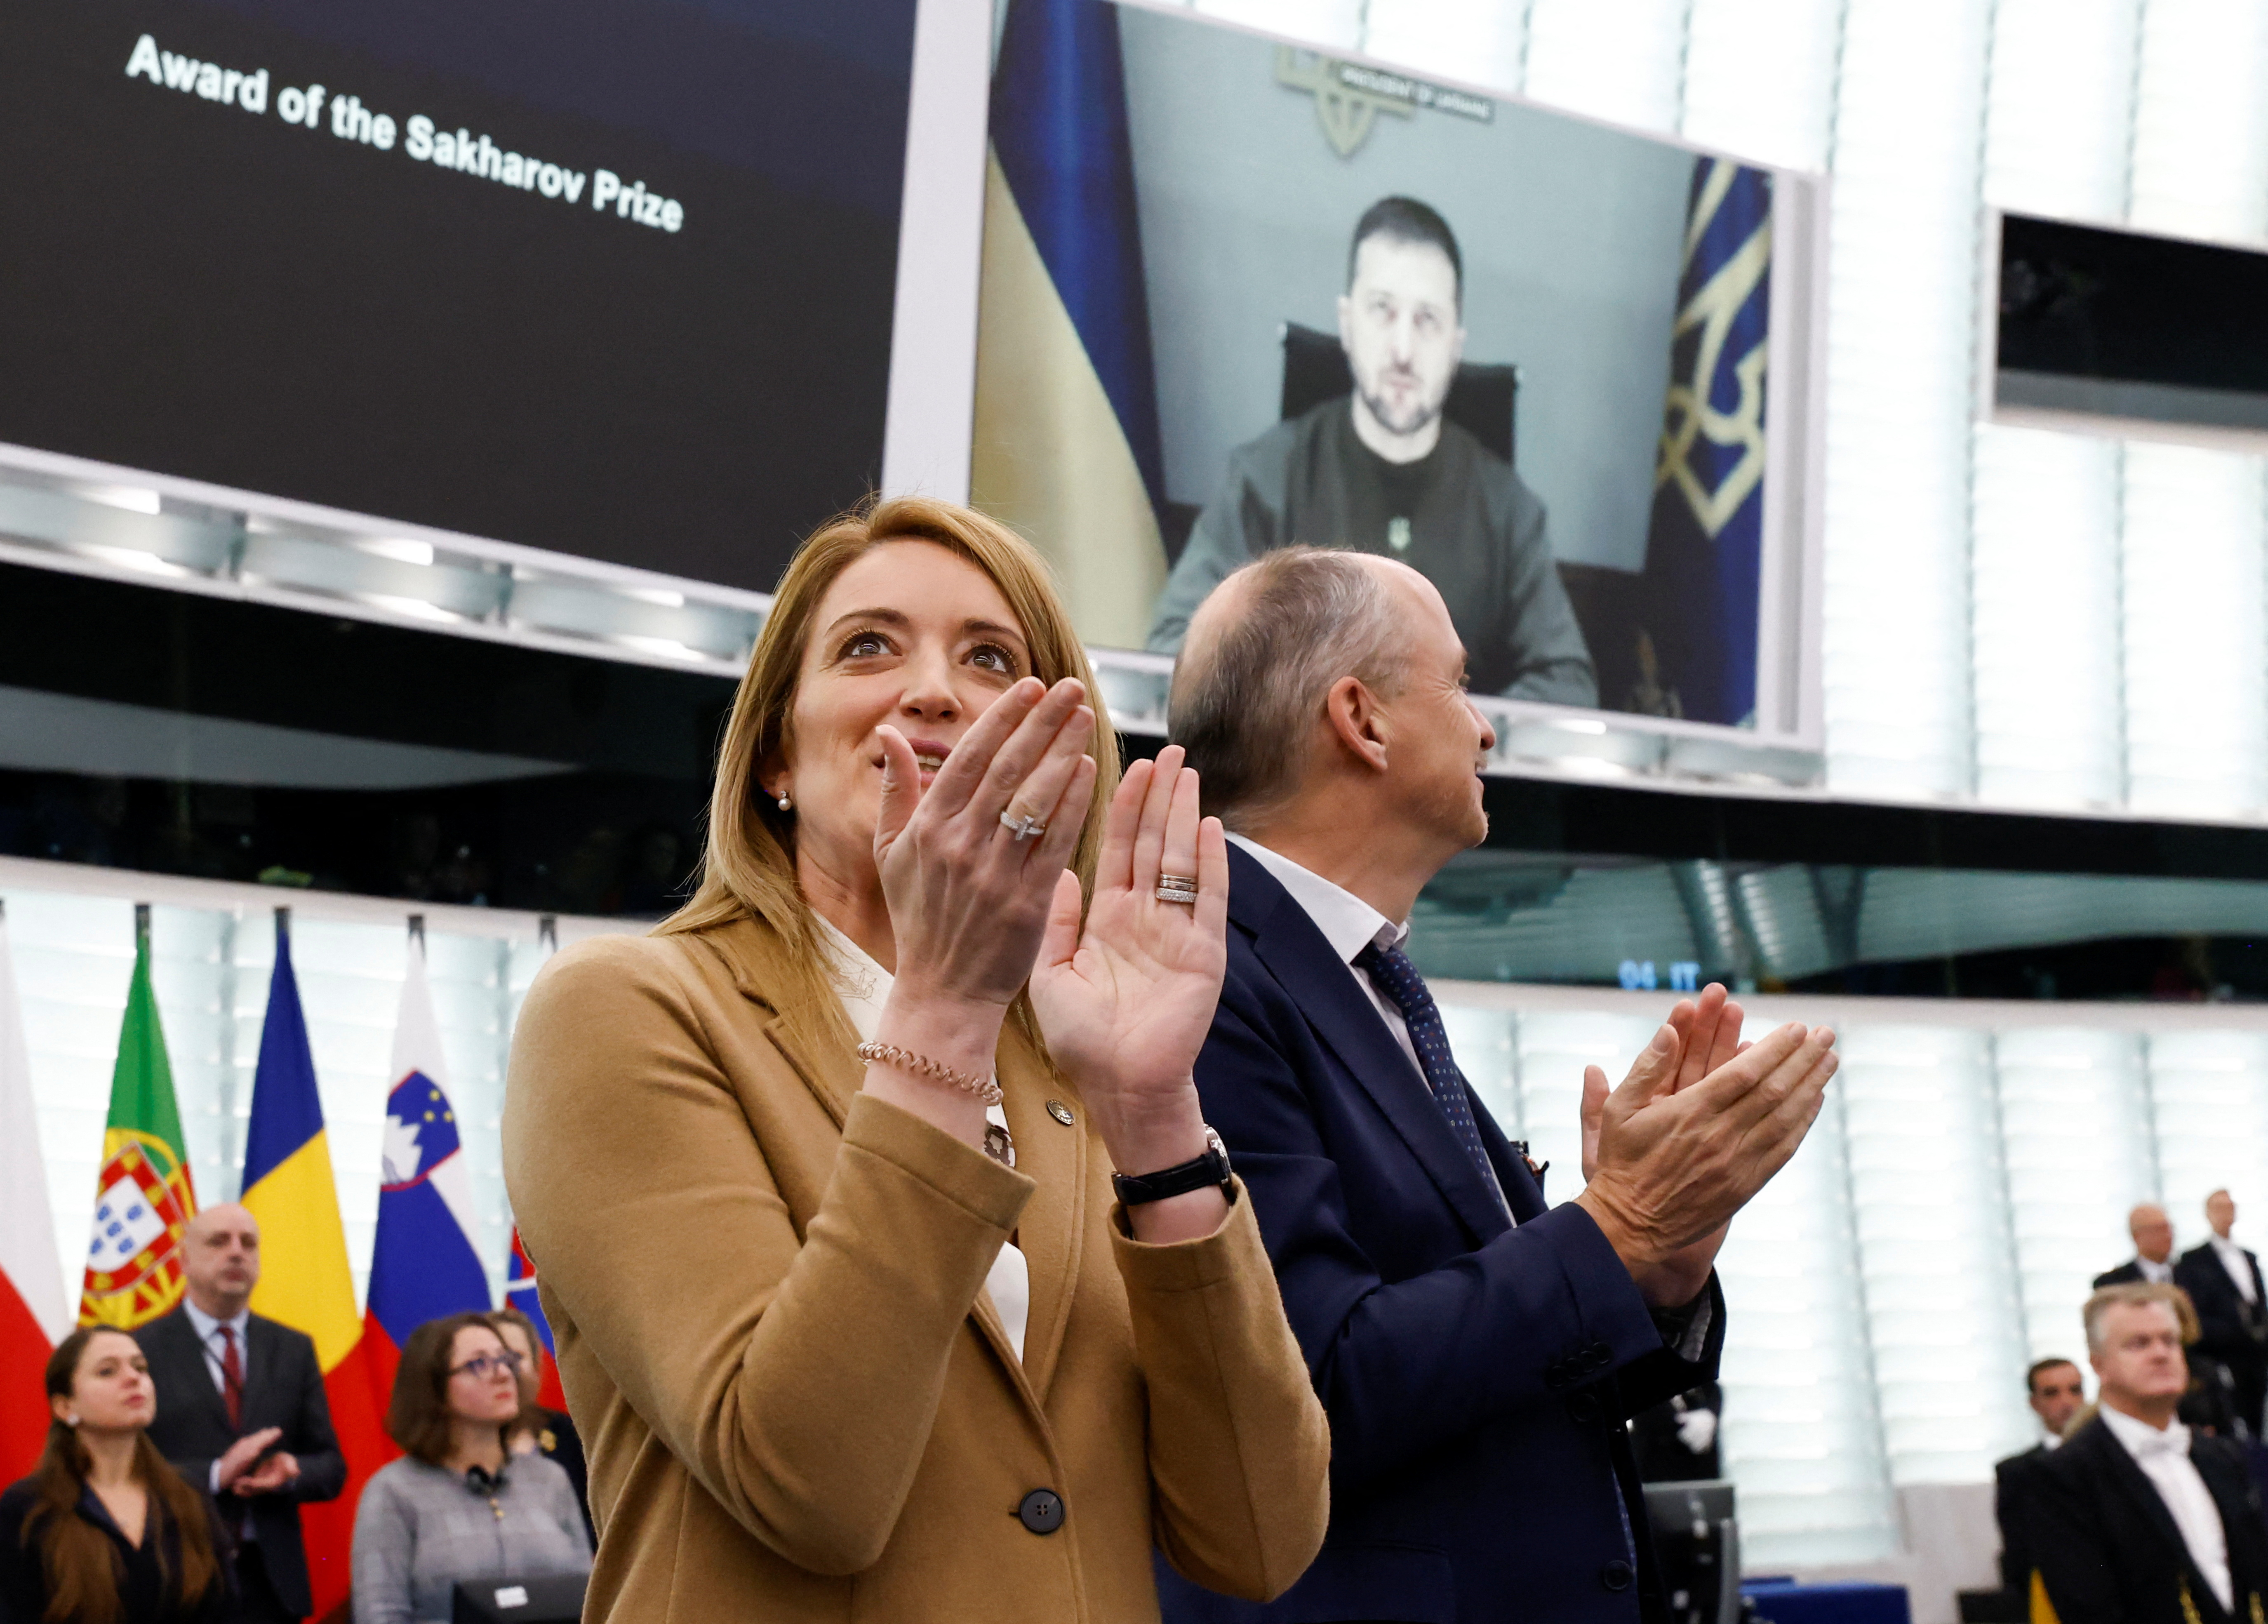 EU Parliament awards Sakharov prize to the Ukrainian people, in Strasbourg